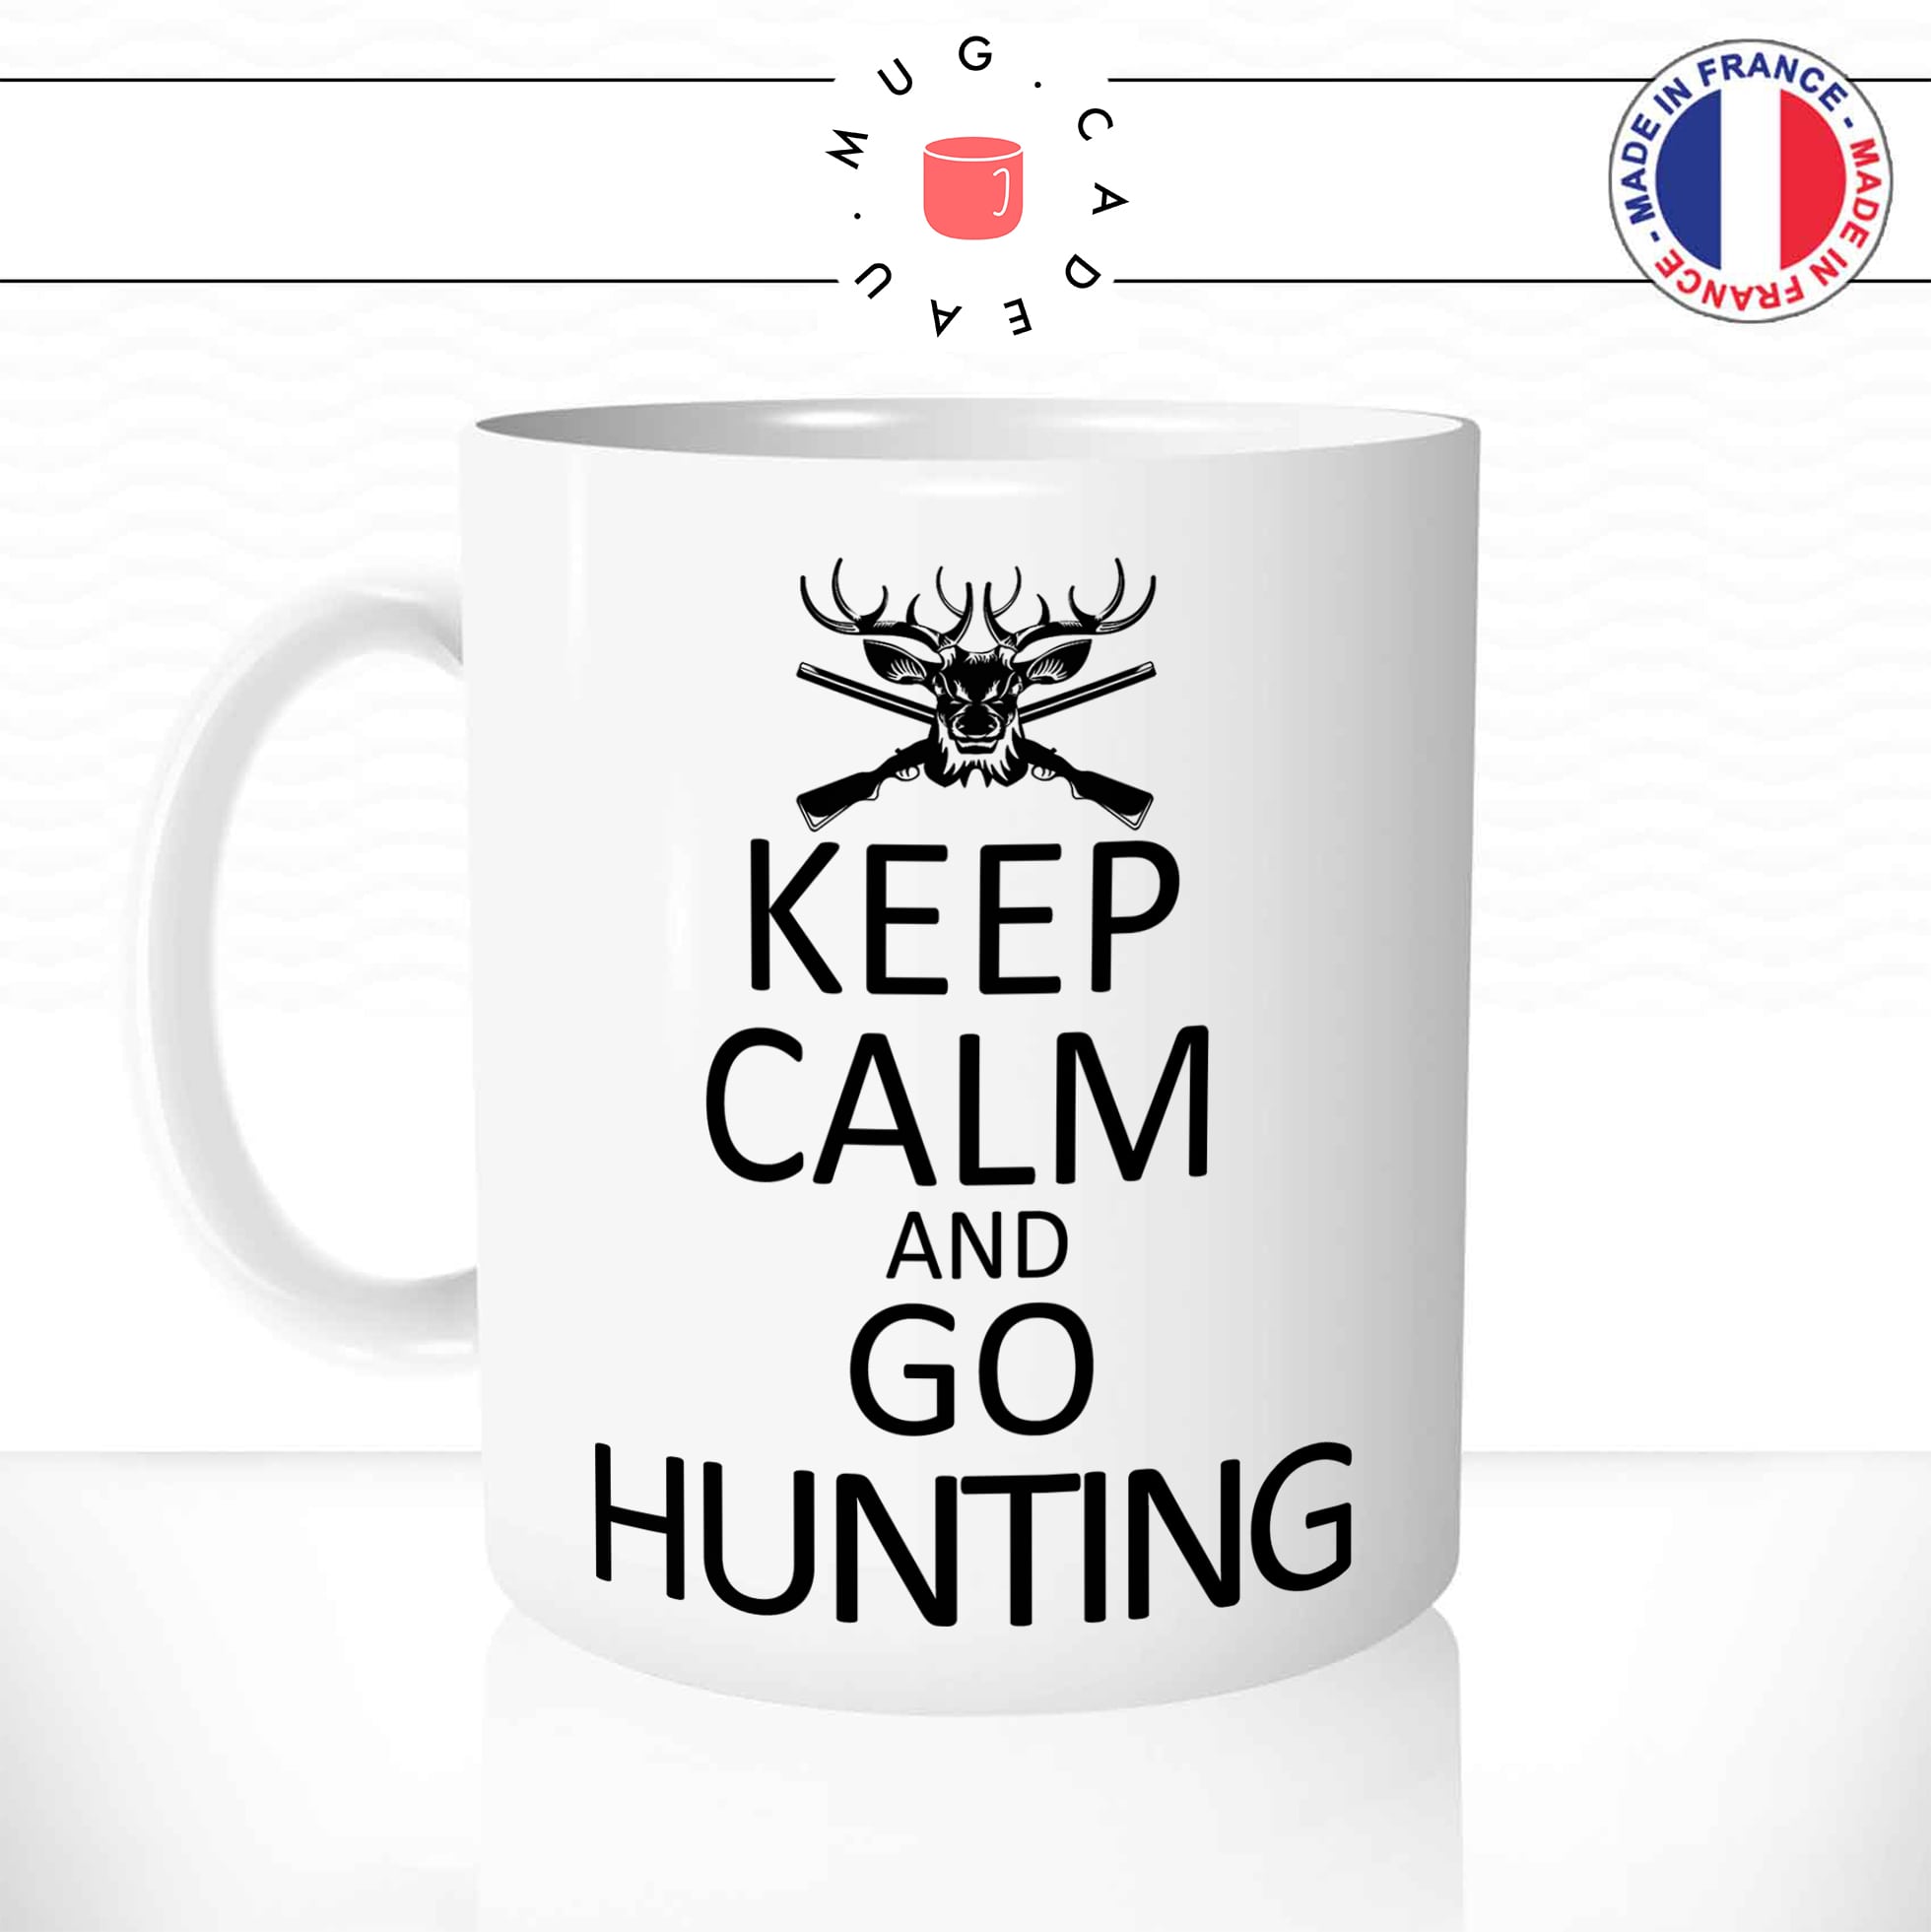 mug-tasse-keep-calm-and-go-hunting-chasse-chasser-chasseur-fusil-passion-homme-idée-cadeau-original-fun-café-thé-tasse-personnalisée-min